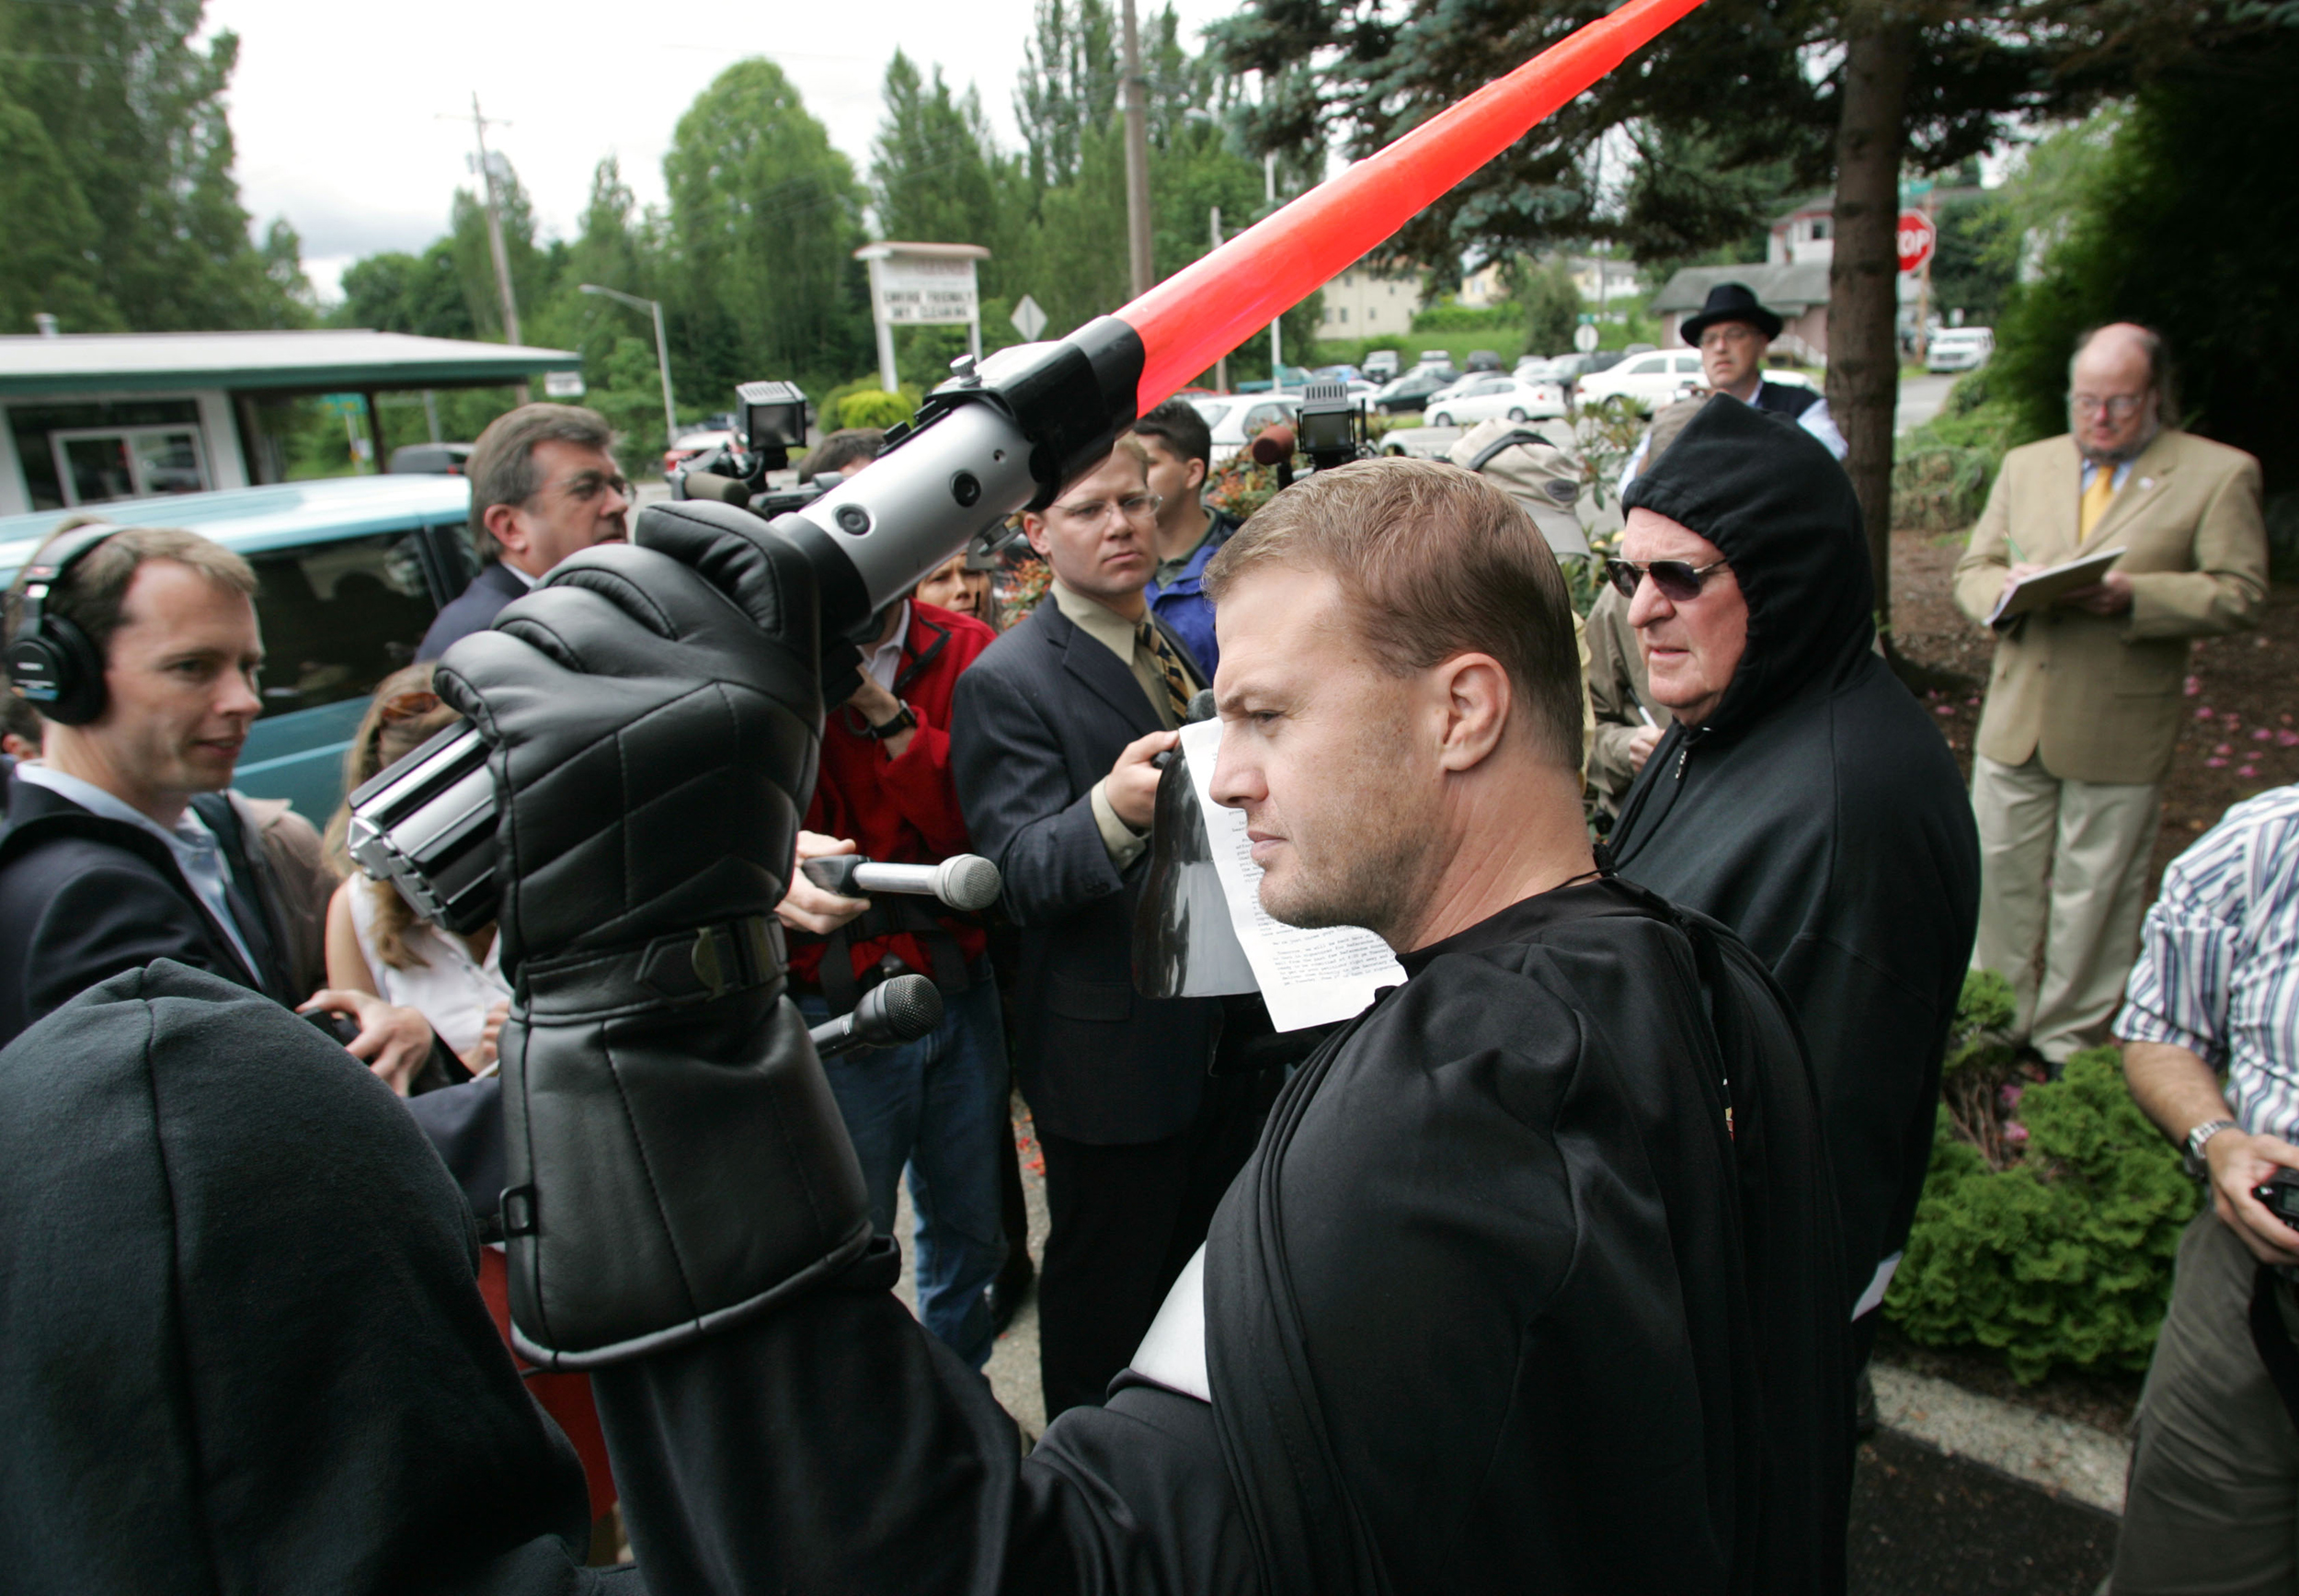 Tim Eyman, dressed as Darth Vader, holding a plastic light saber 